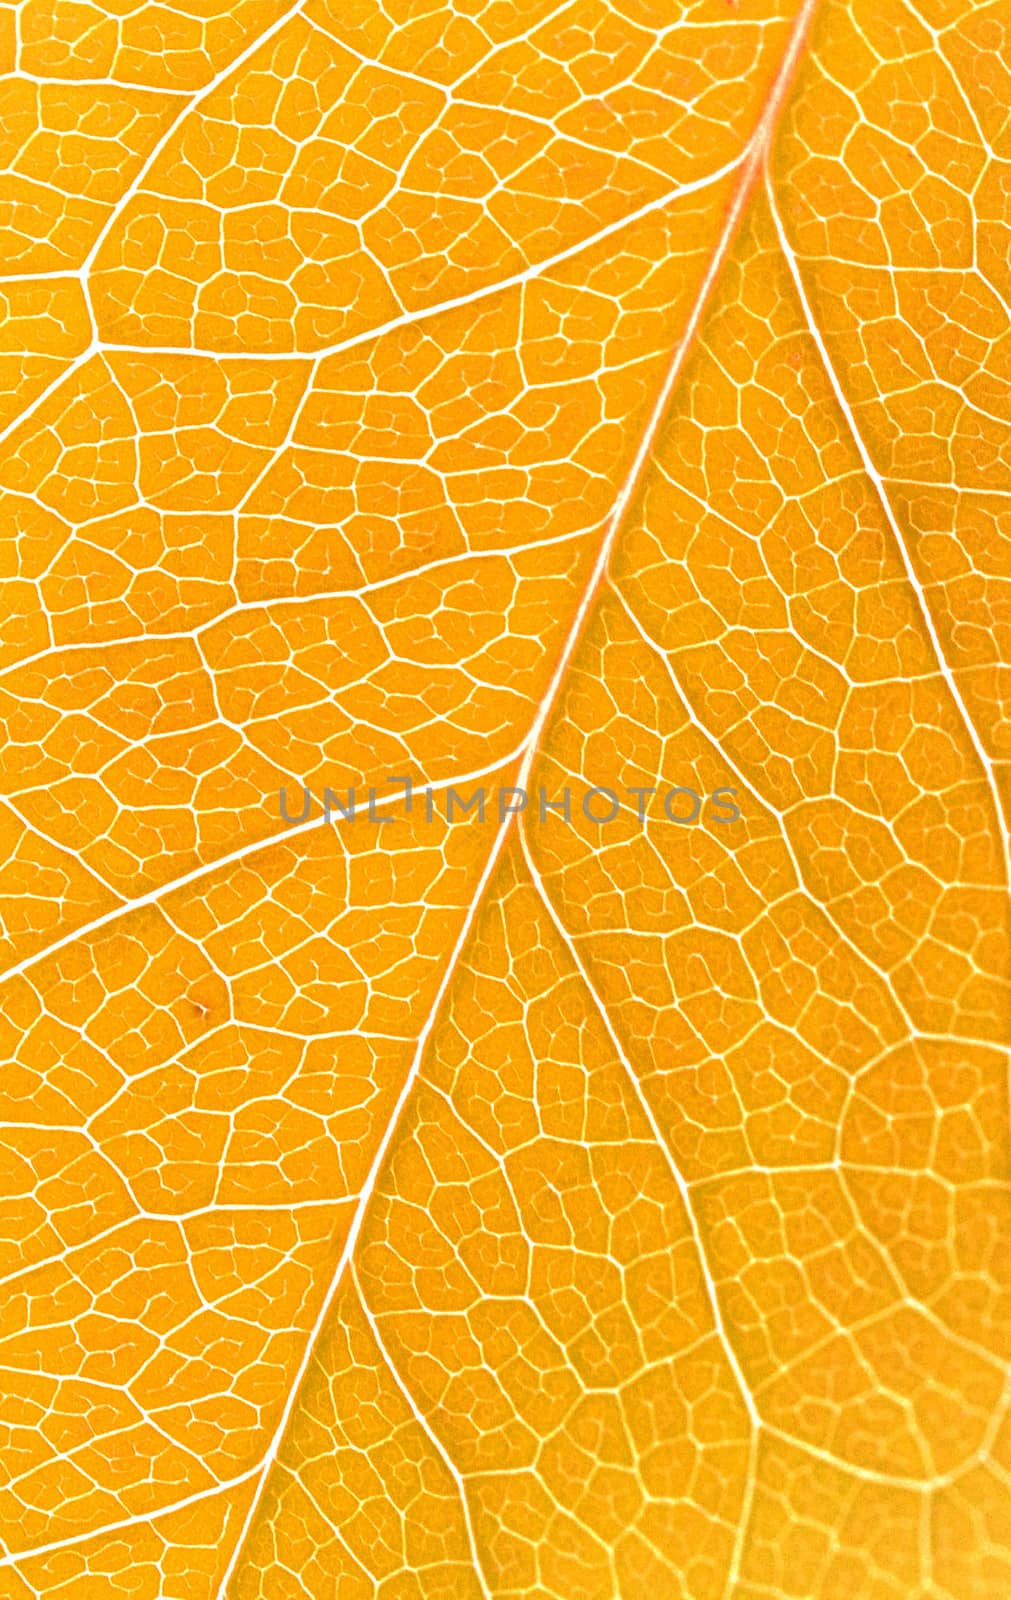 Beautiful yellow autumn leaves background